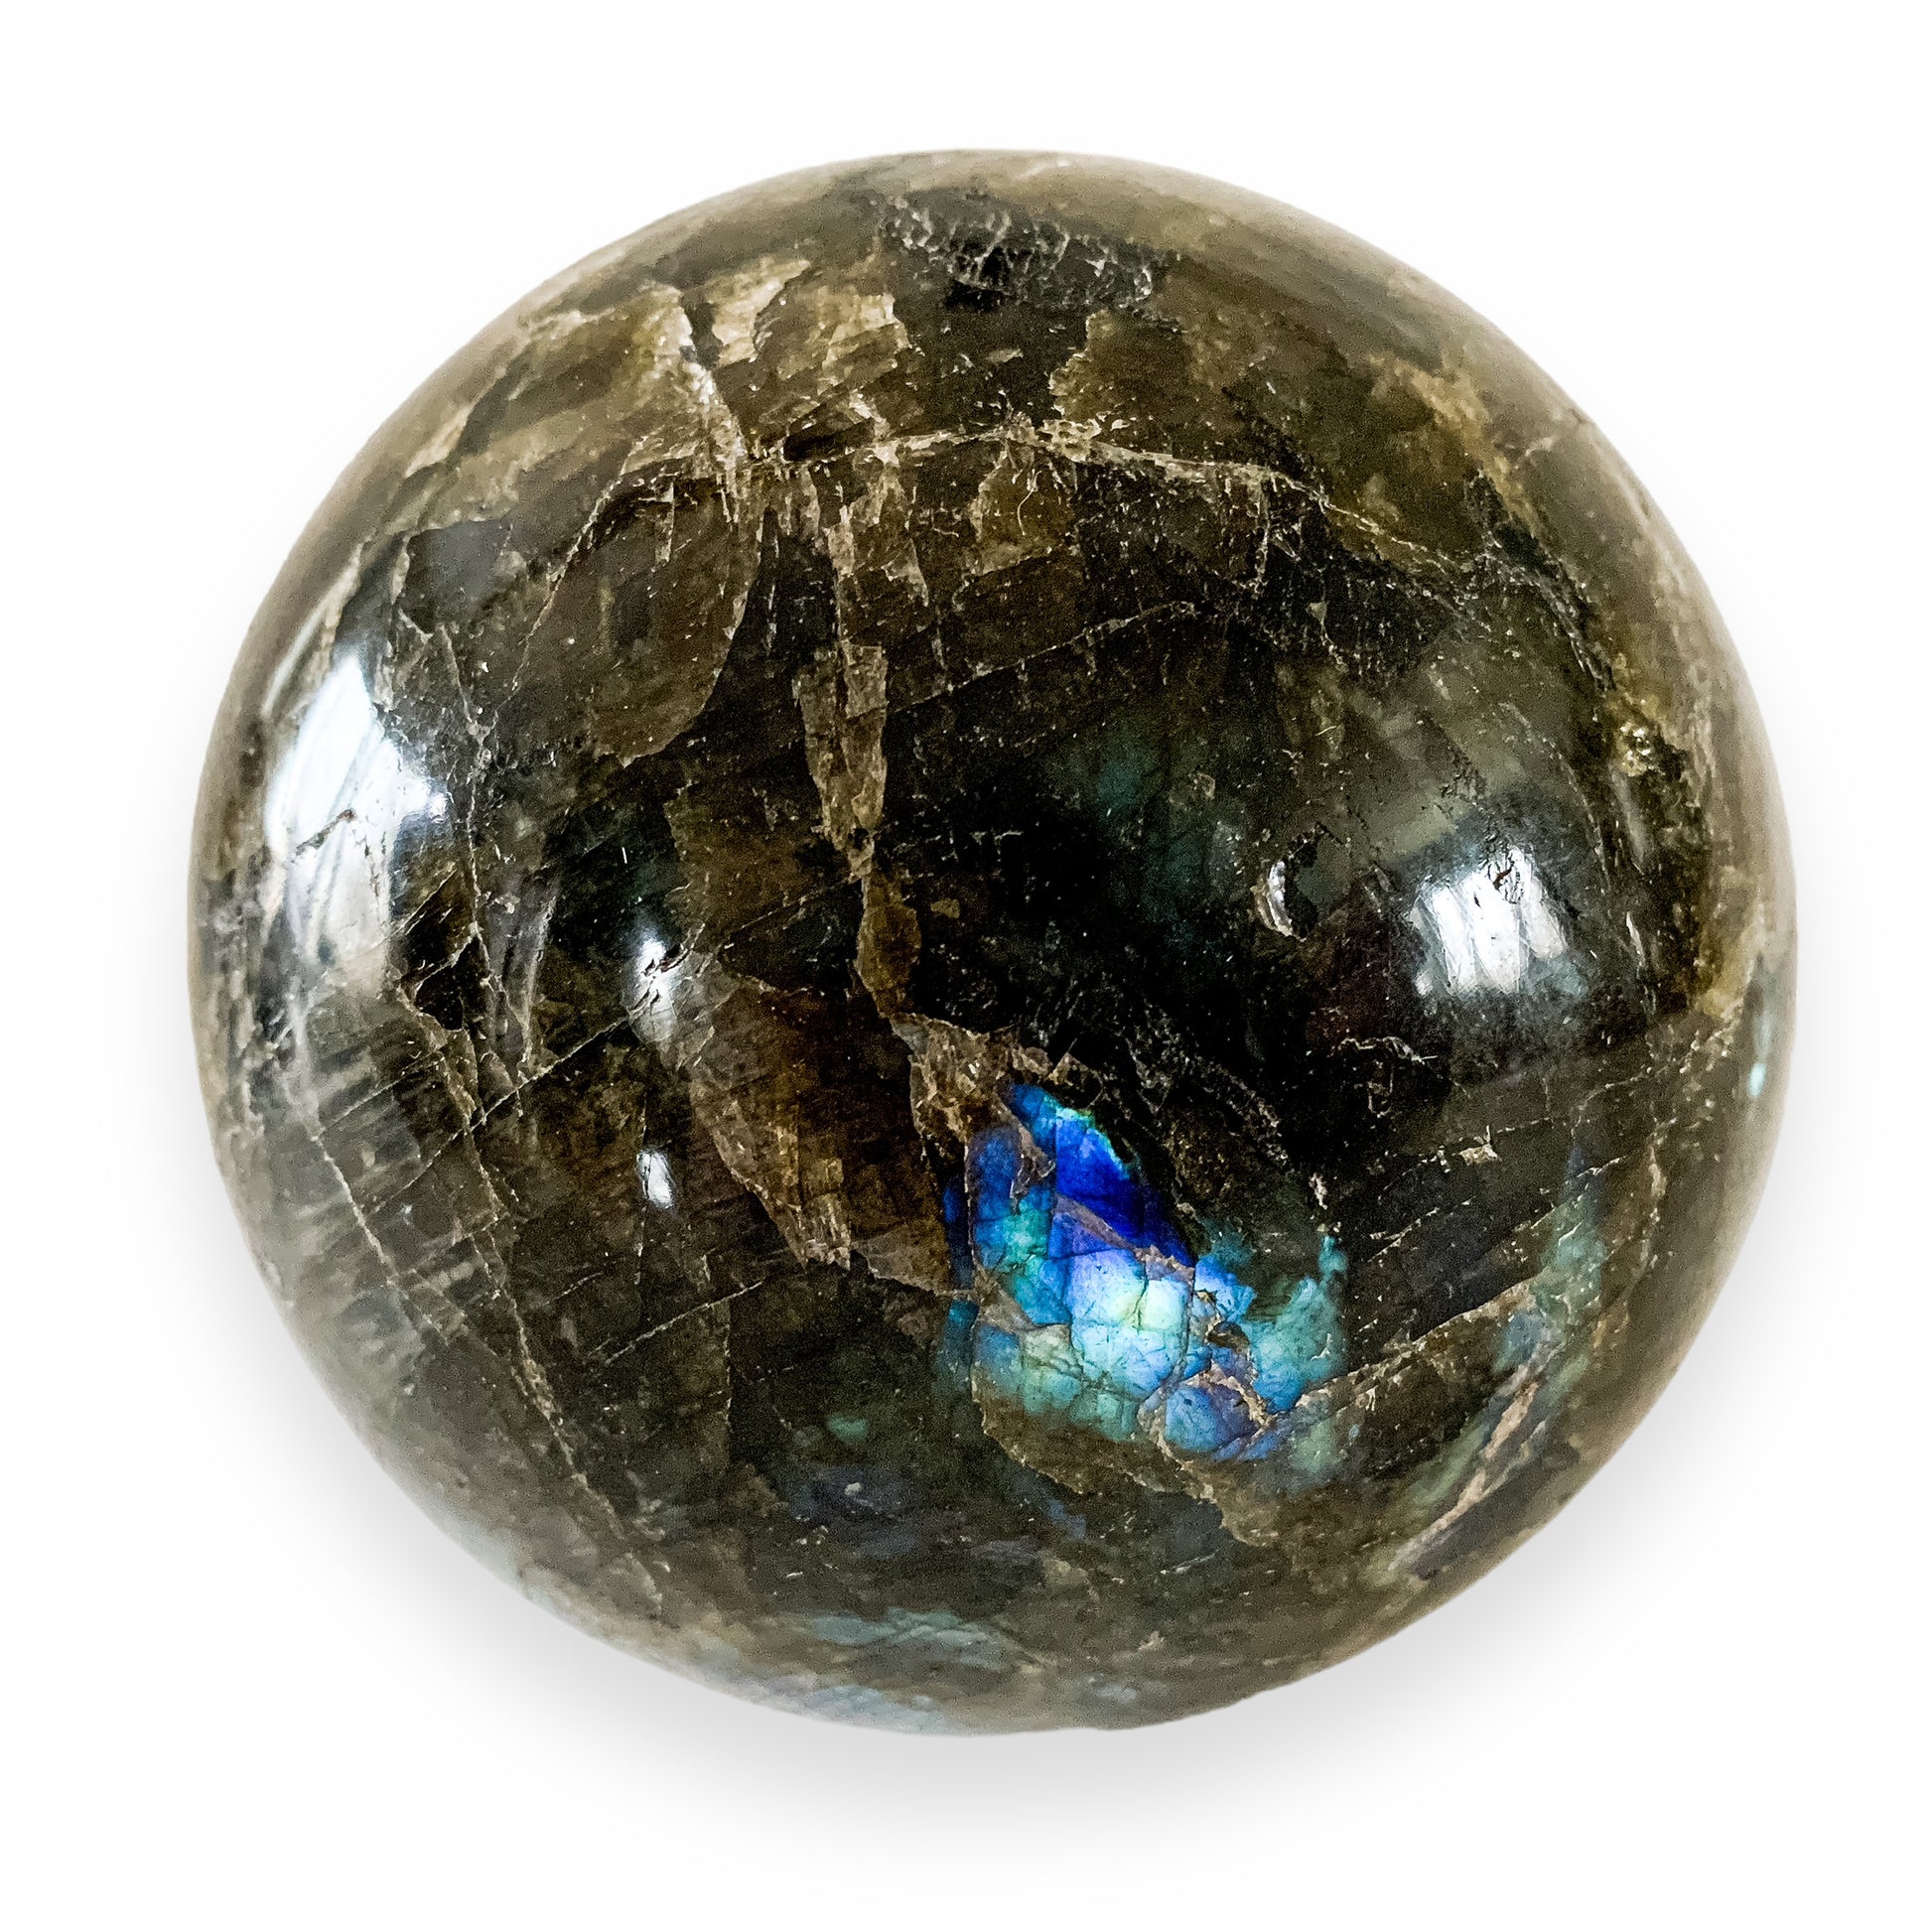 Iridescent Labradorite sphere